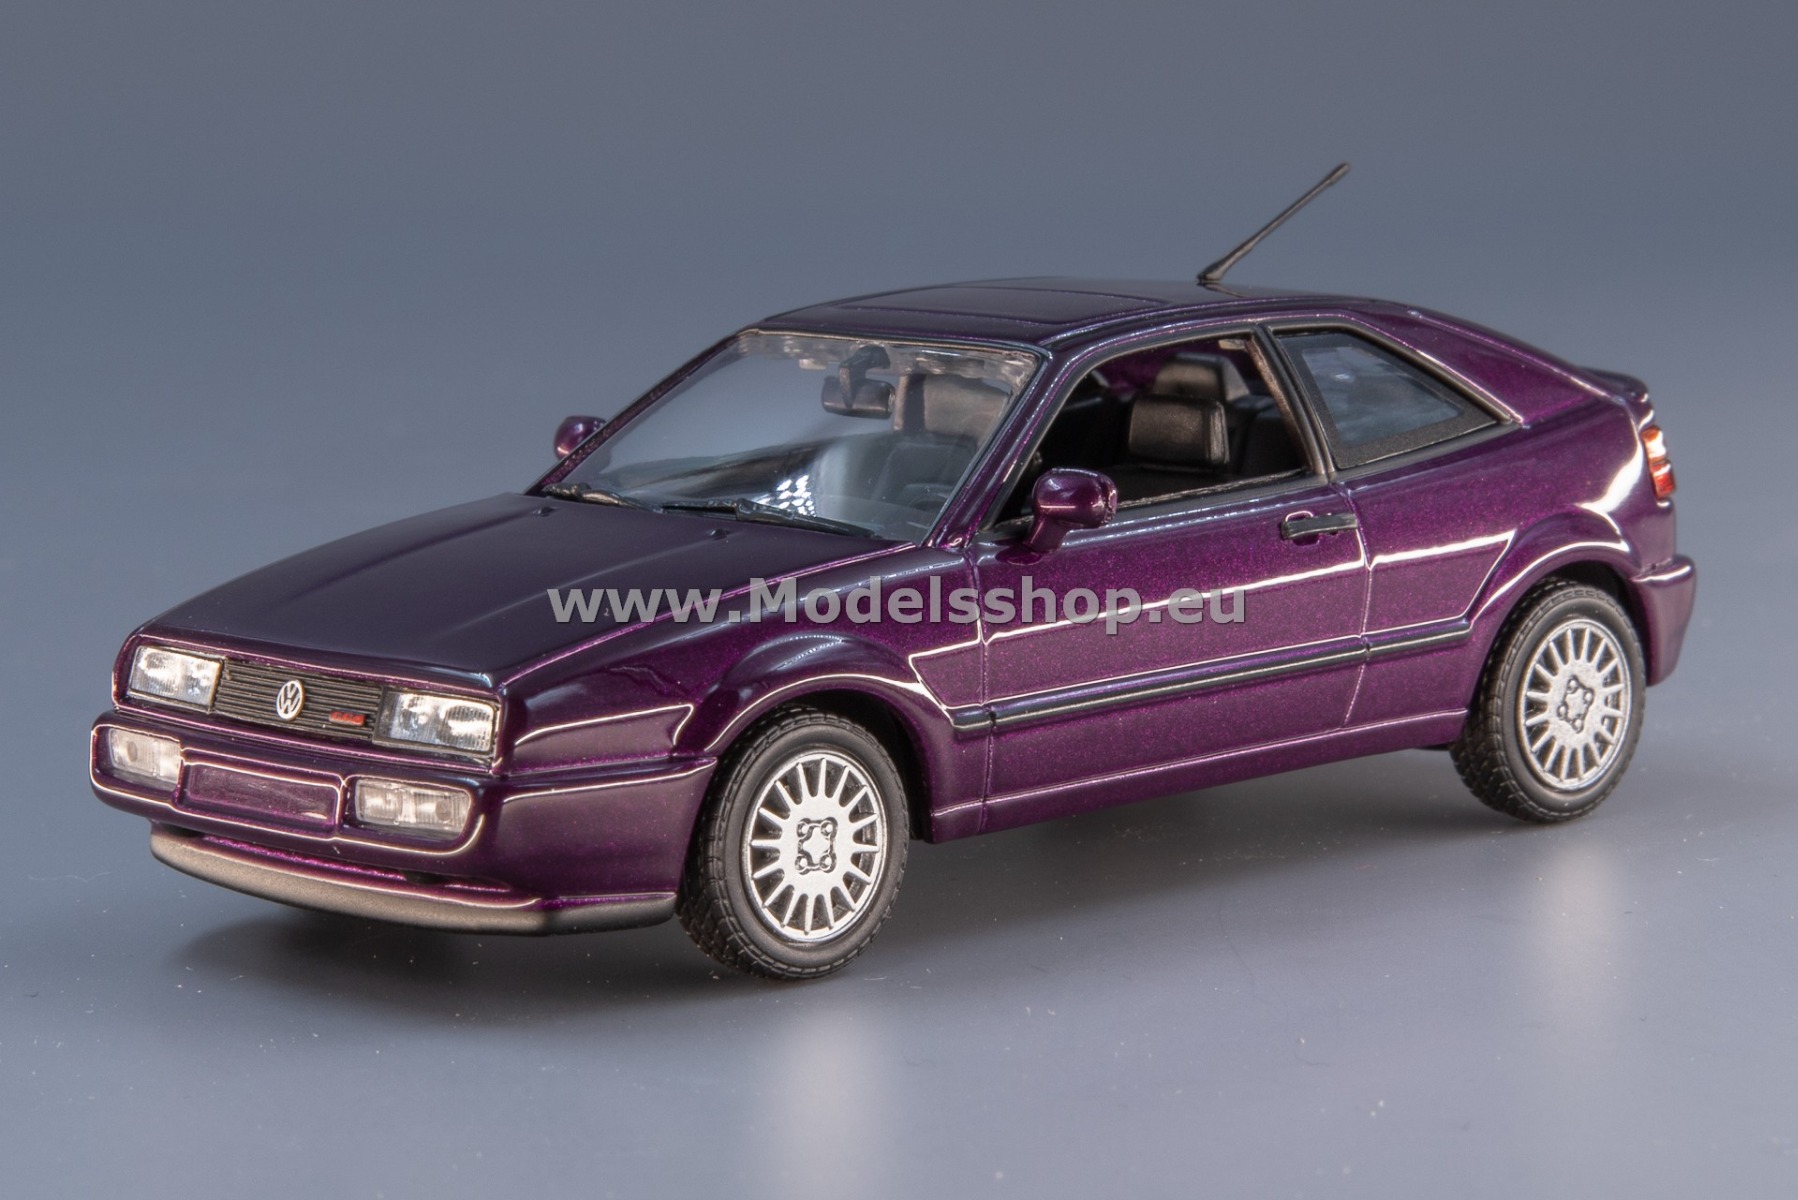 Maxichamps 940055604 Volkswagen Corrado G60, 1990 /purple metallic/